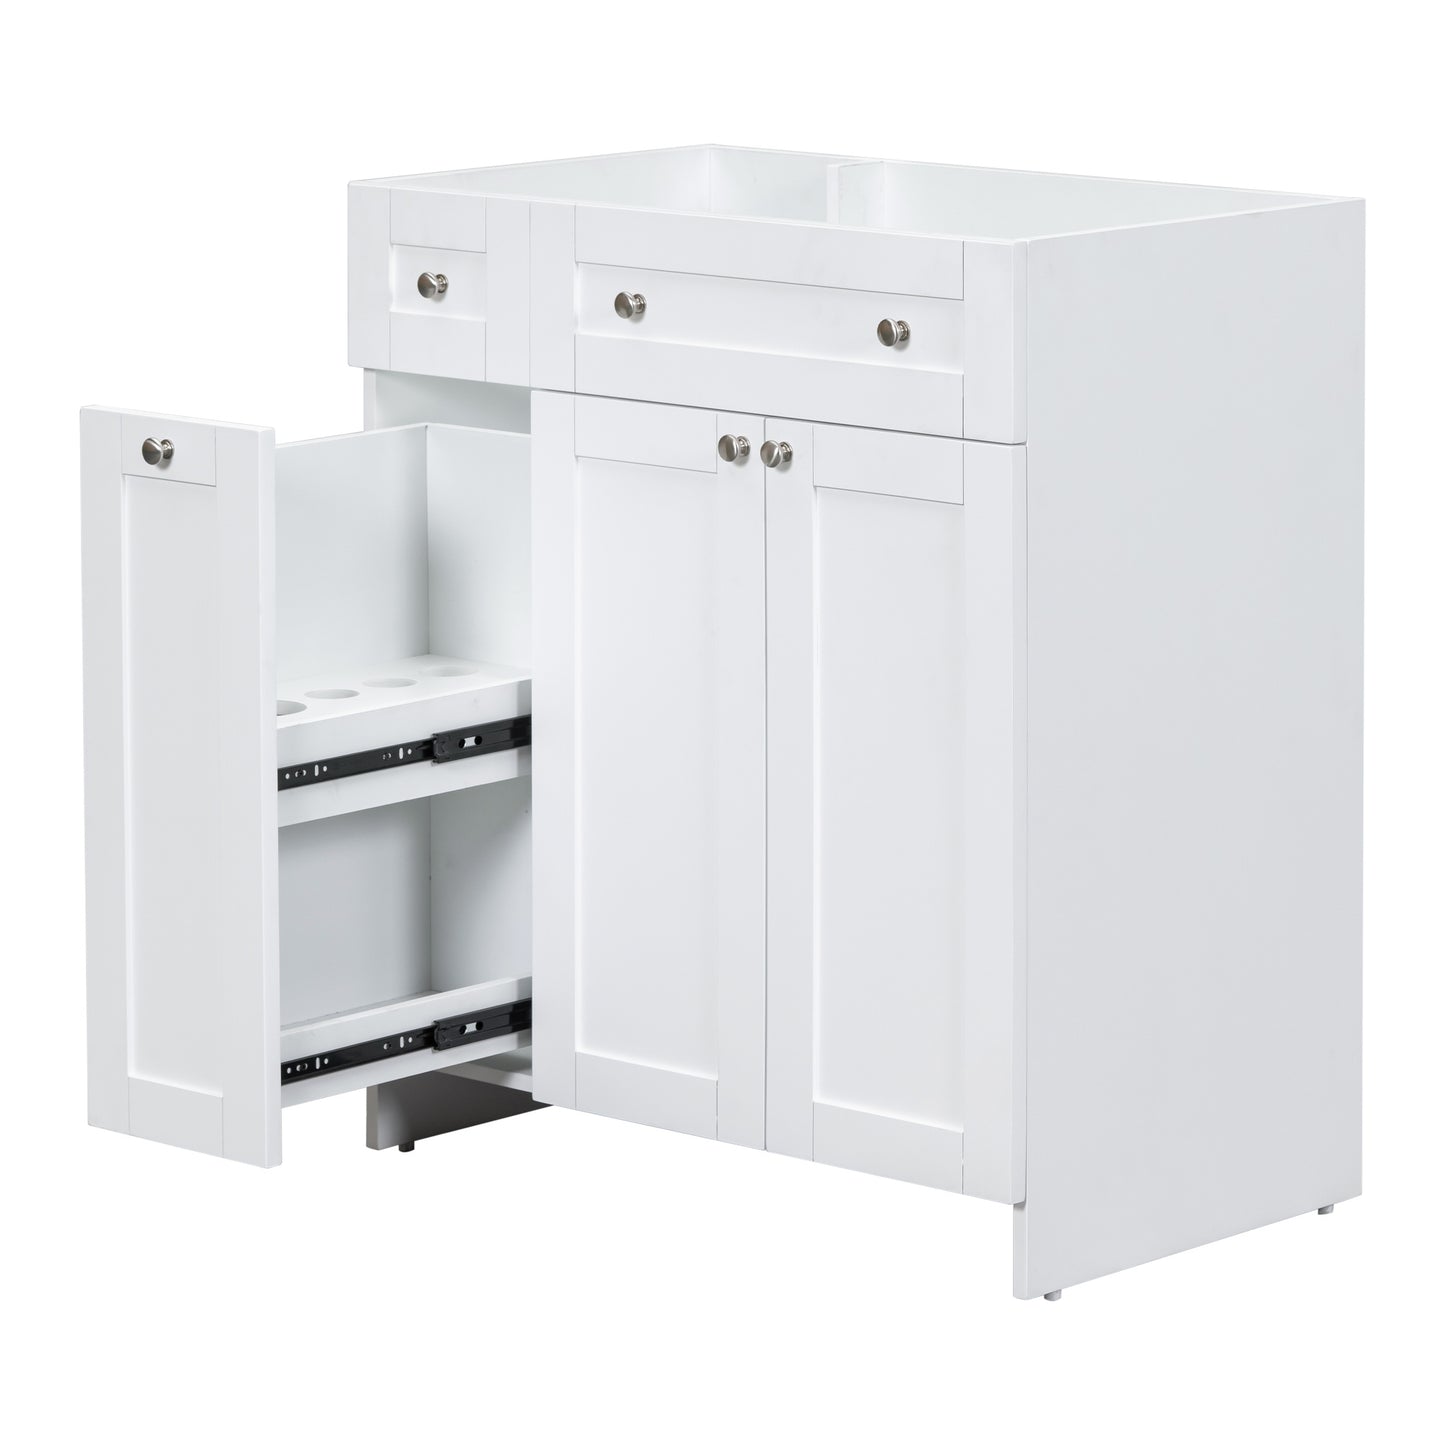 [Cabinet Only] 30" Bathroom Vanity-White